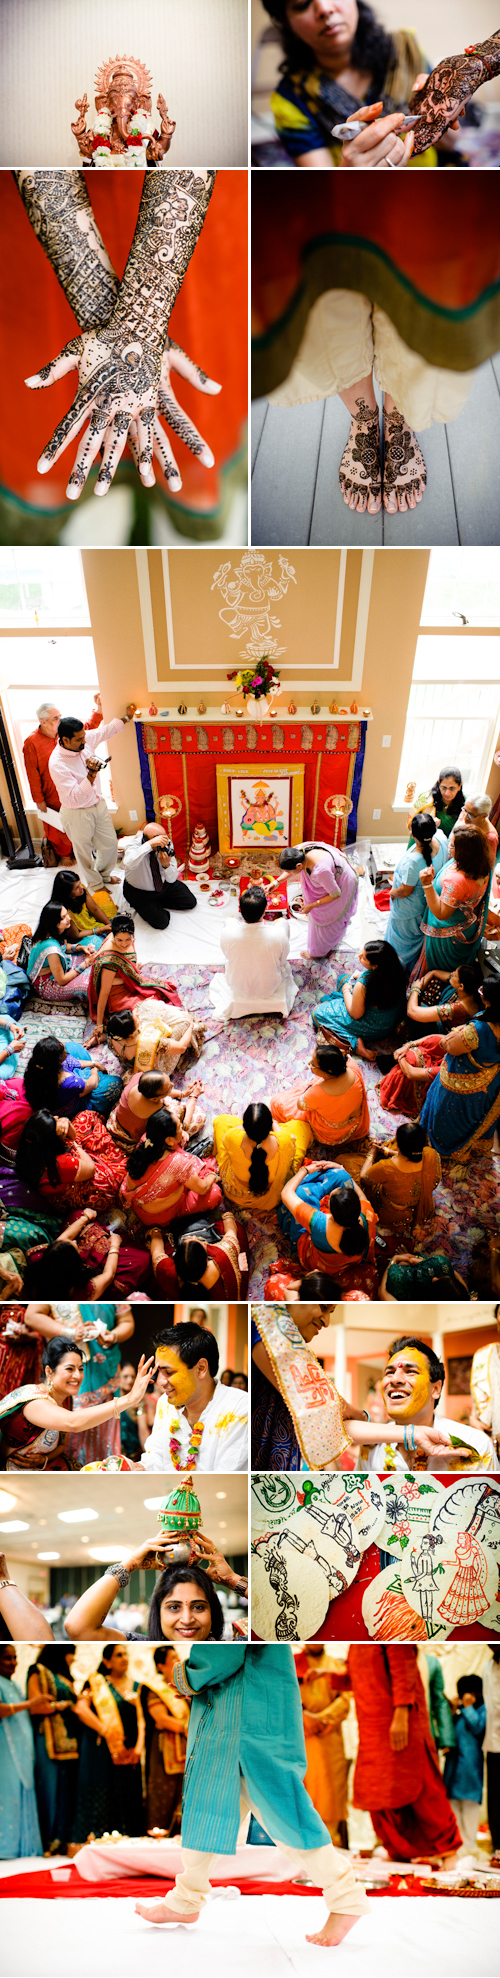 gorgeous Indian wedding ceremony preparations - photos by Portland, Oregon based wedding photographer Aaron Courter